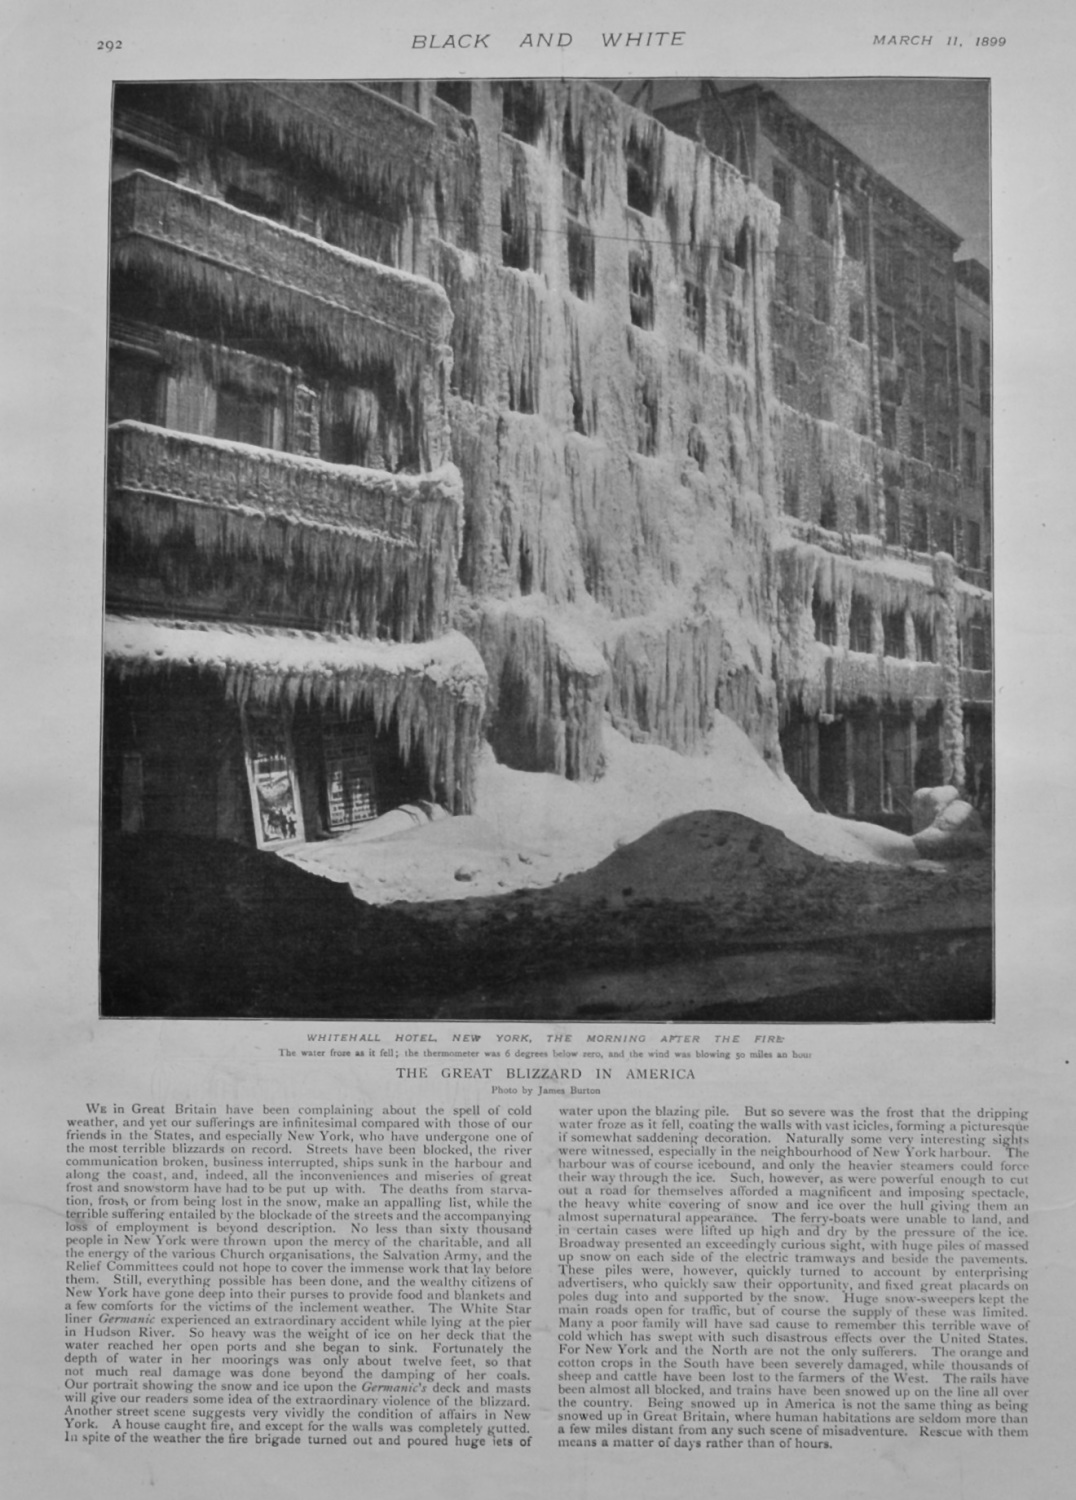 The Great Blizzard in America.  1899.